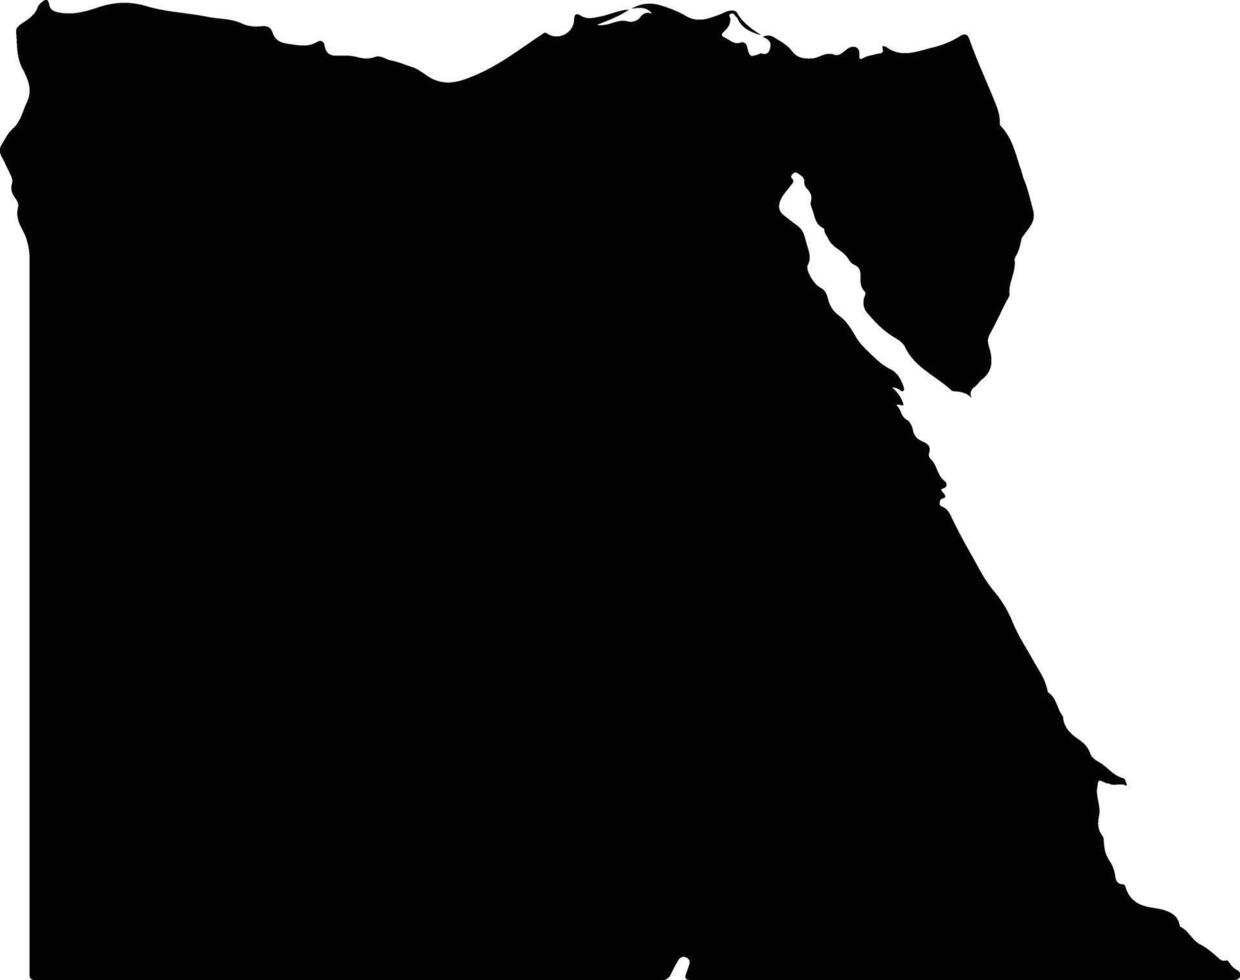 Egypt silhouette map vector